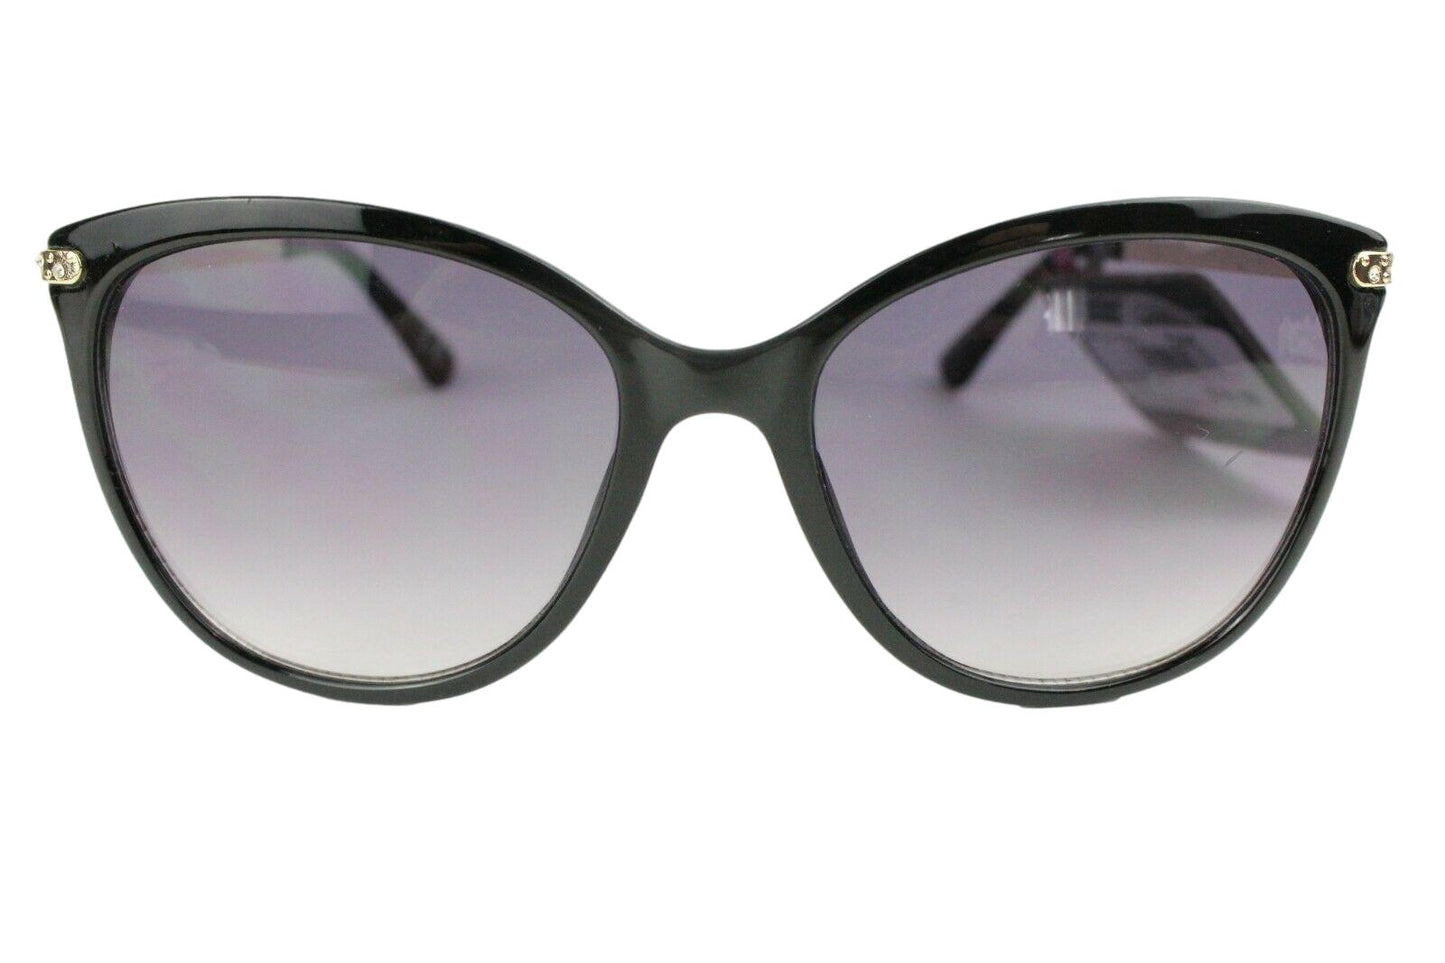 Buy Foster Grant Mireya Black Sunglasses in USA – General Wholesale Direct